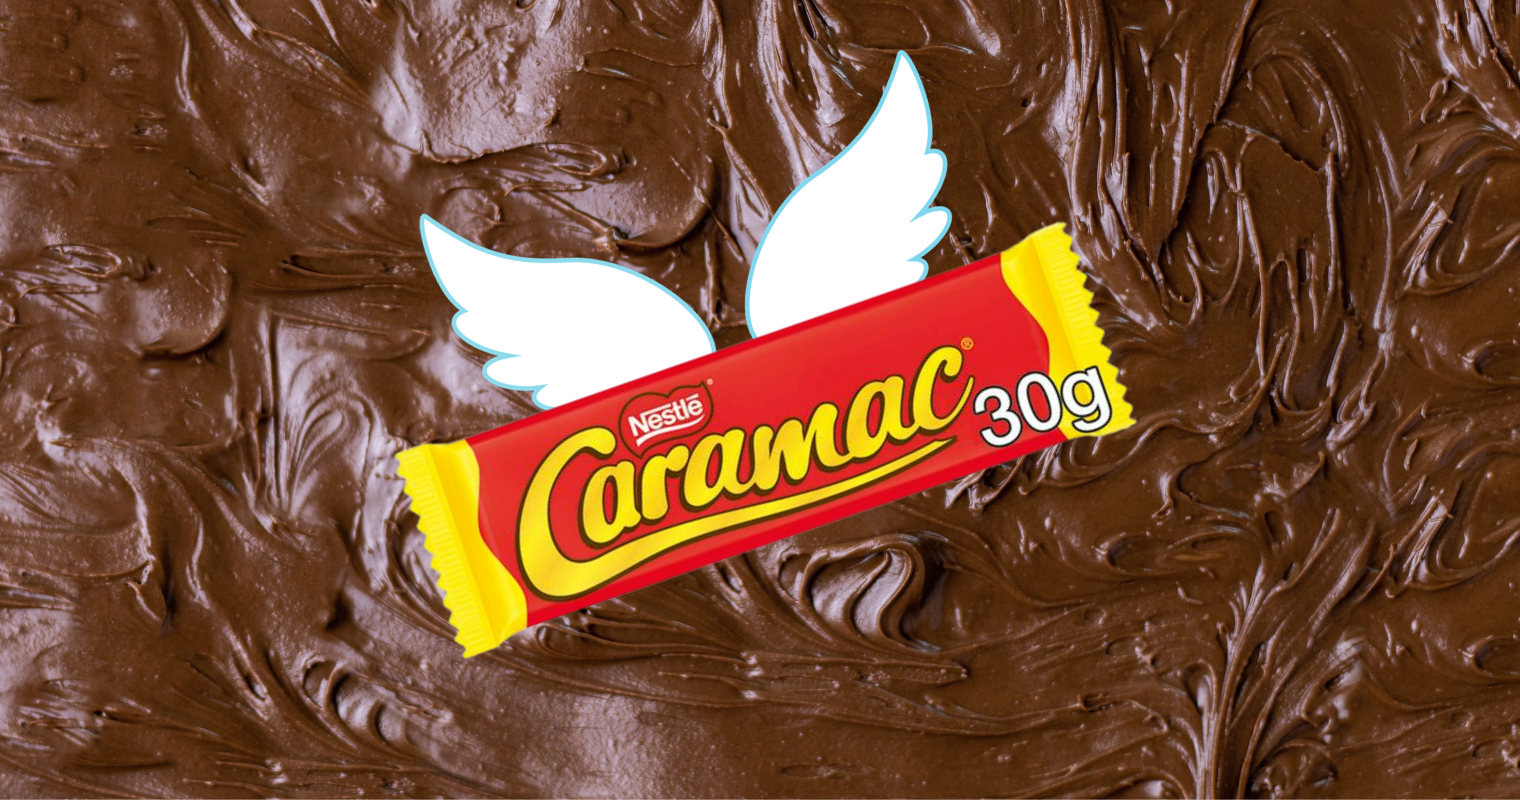 Nestle is discontinuing Caramac. Credit: Unsplash/Nestle